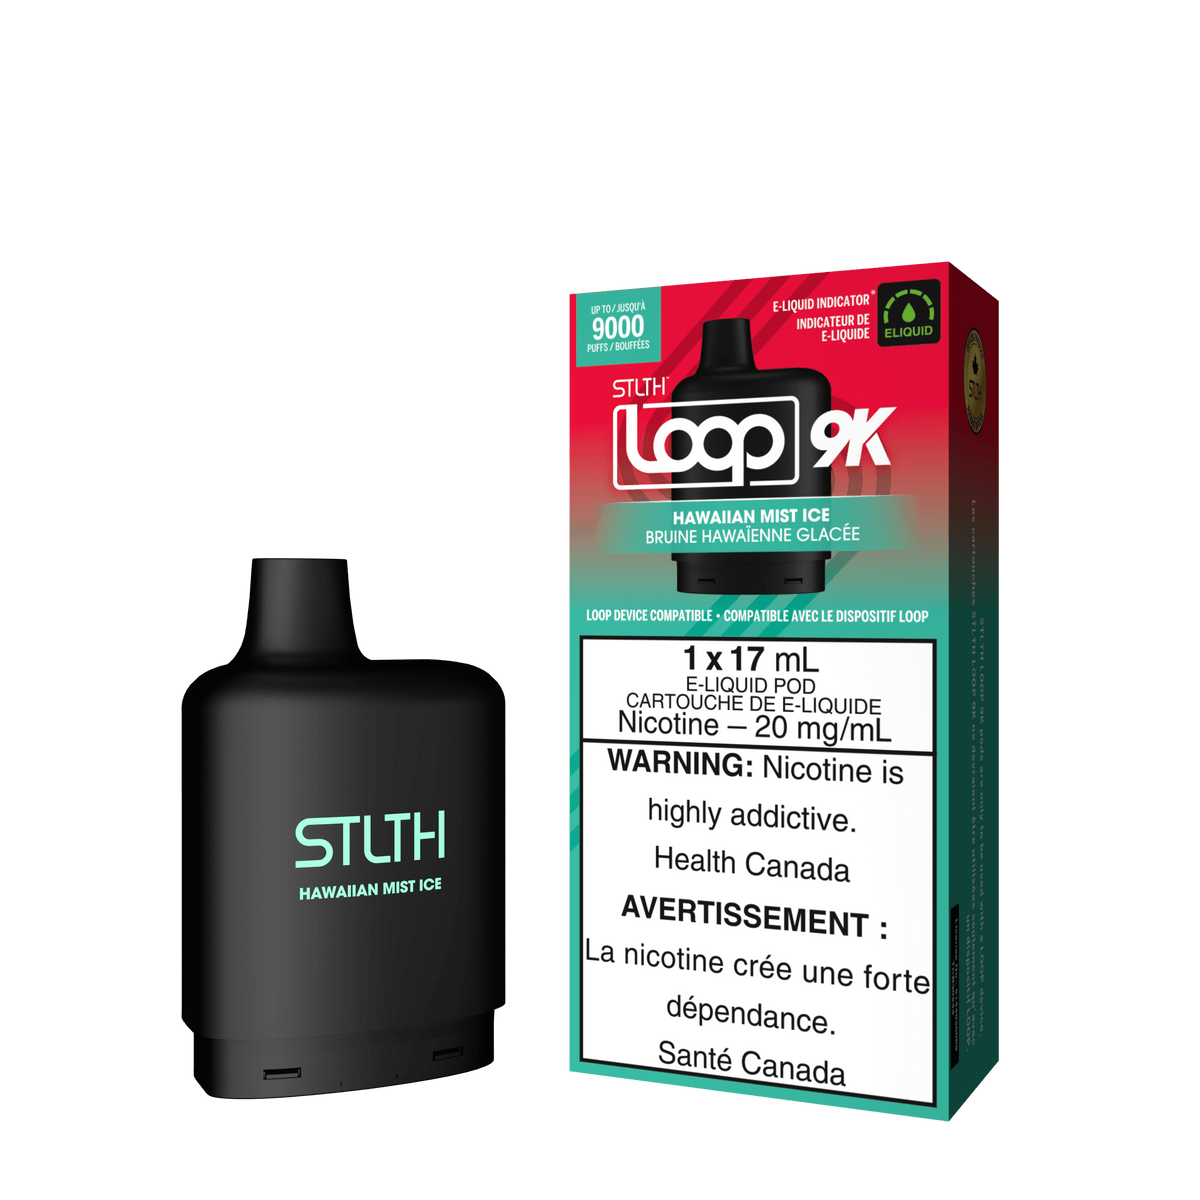 STLTH Loop 9K Pod - Hawaiian Mist Ice available on Canada online vape shop